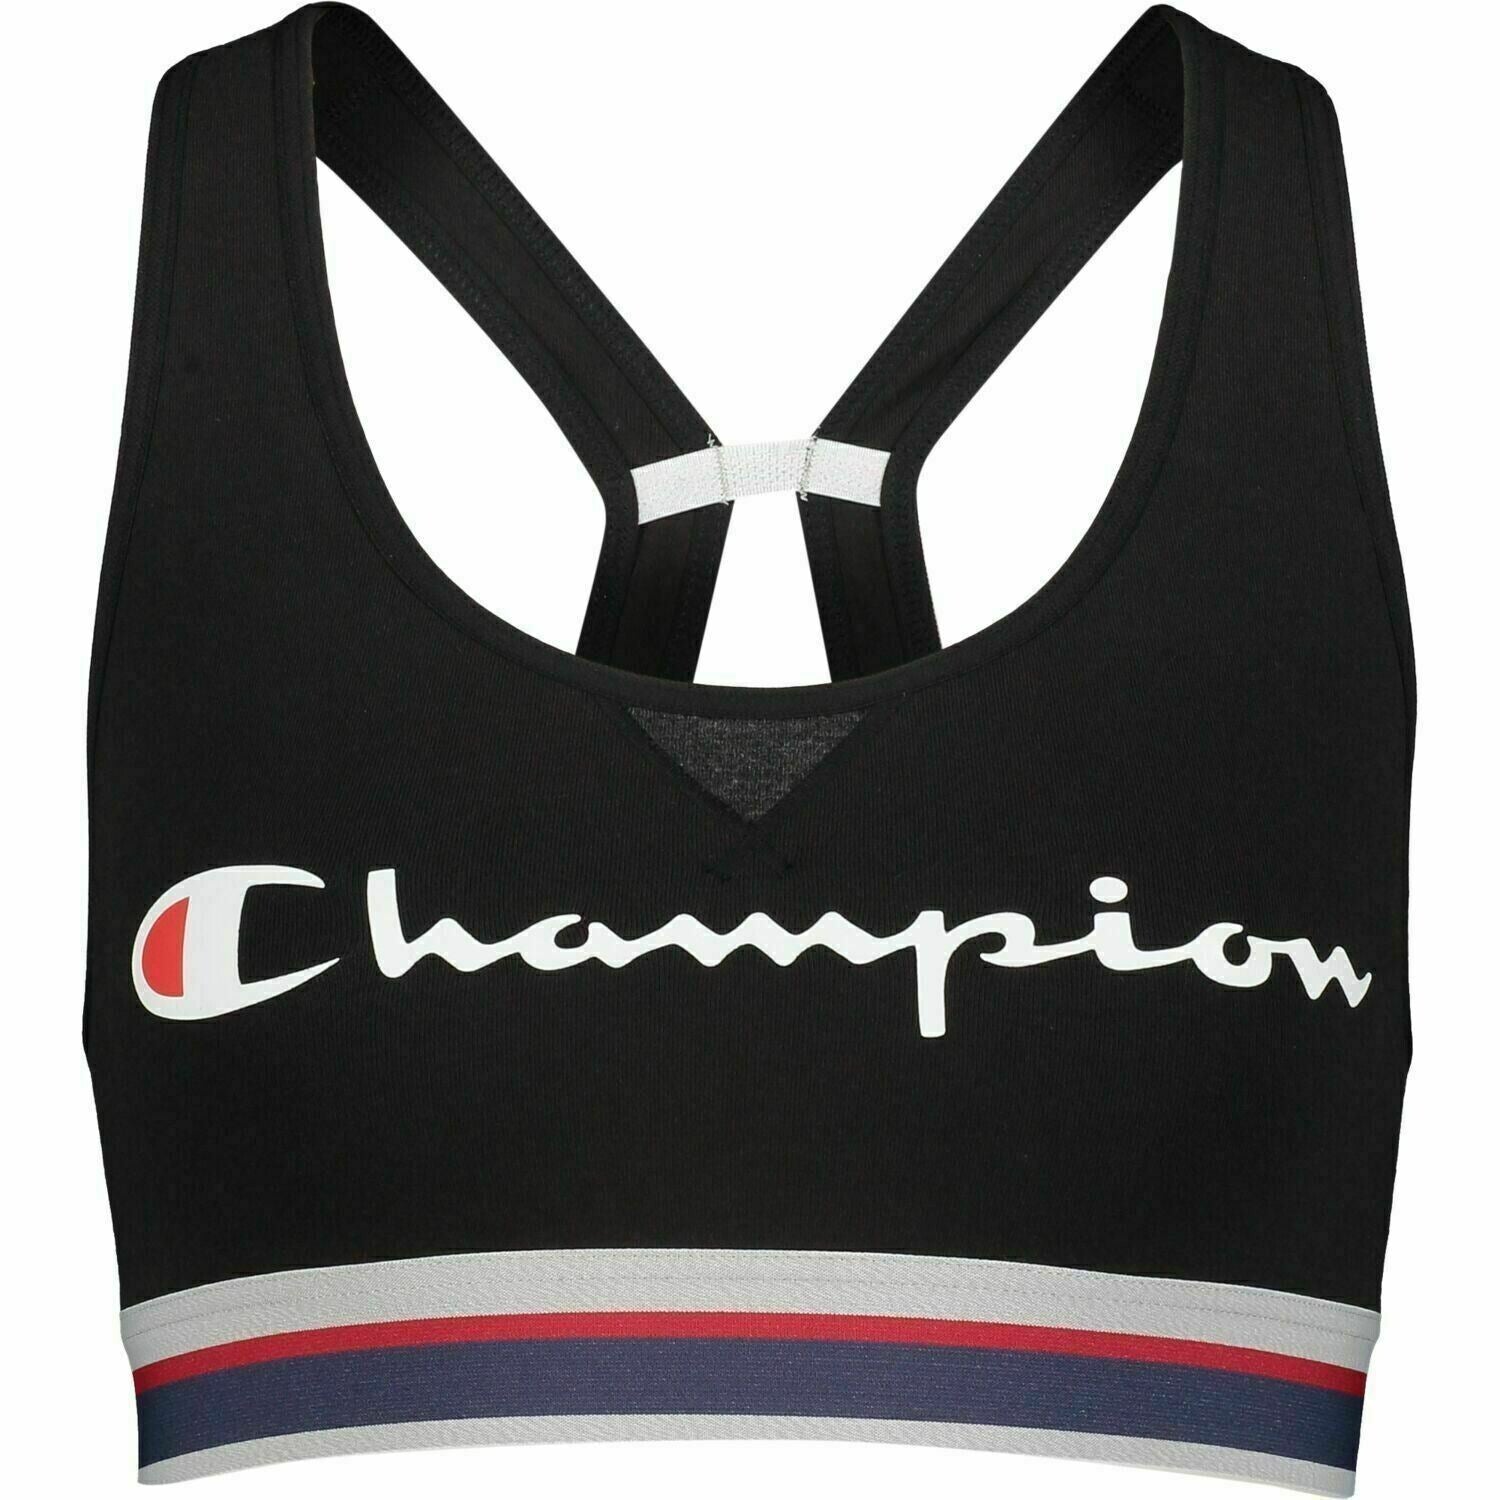 CHAMPION Womens Girls Racerback Crop Top, Black, size M /UK 12